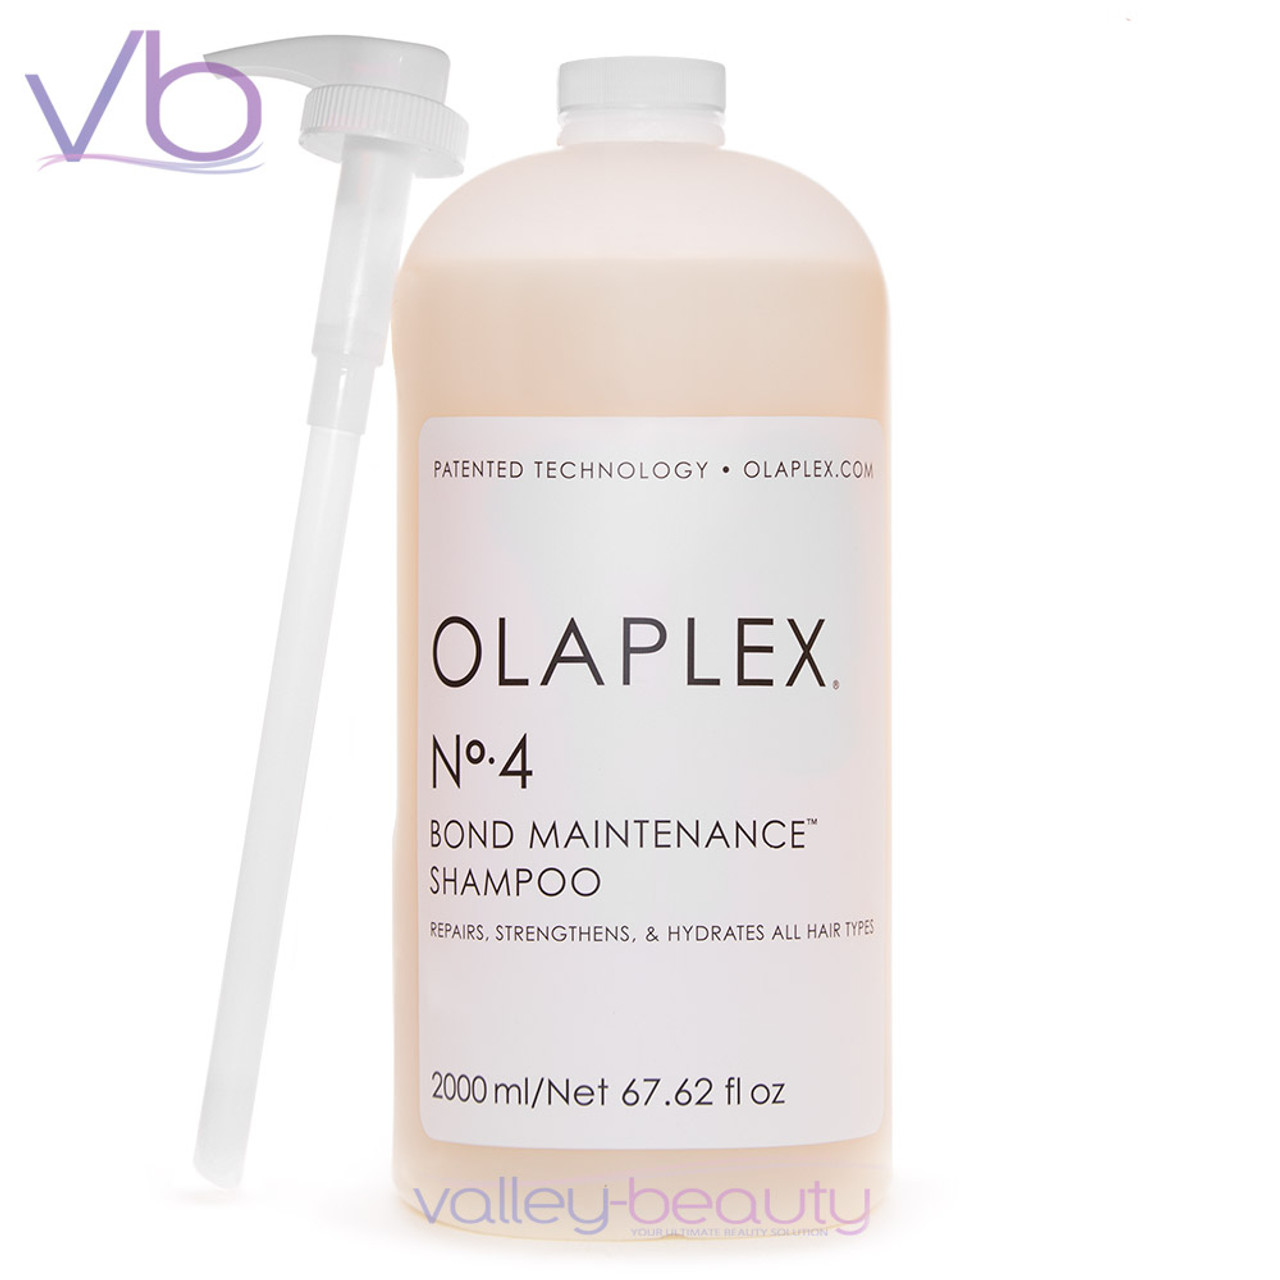 Olaplex No.4 Bond Maintenance Shampoo, 67.62fl.oz.